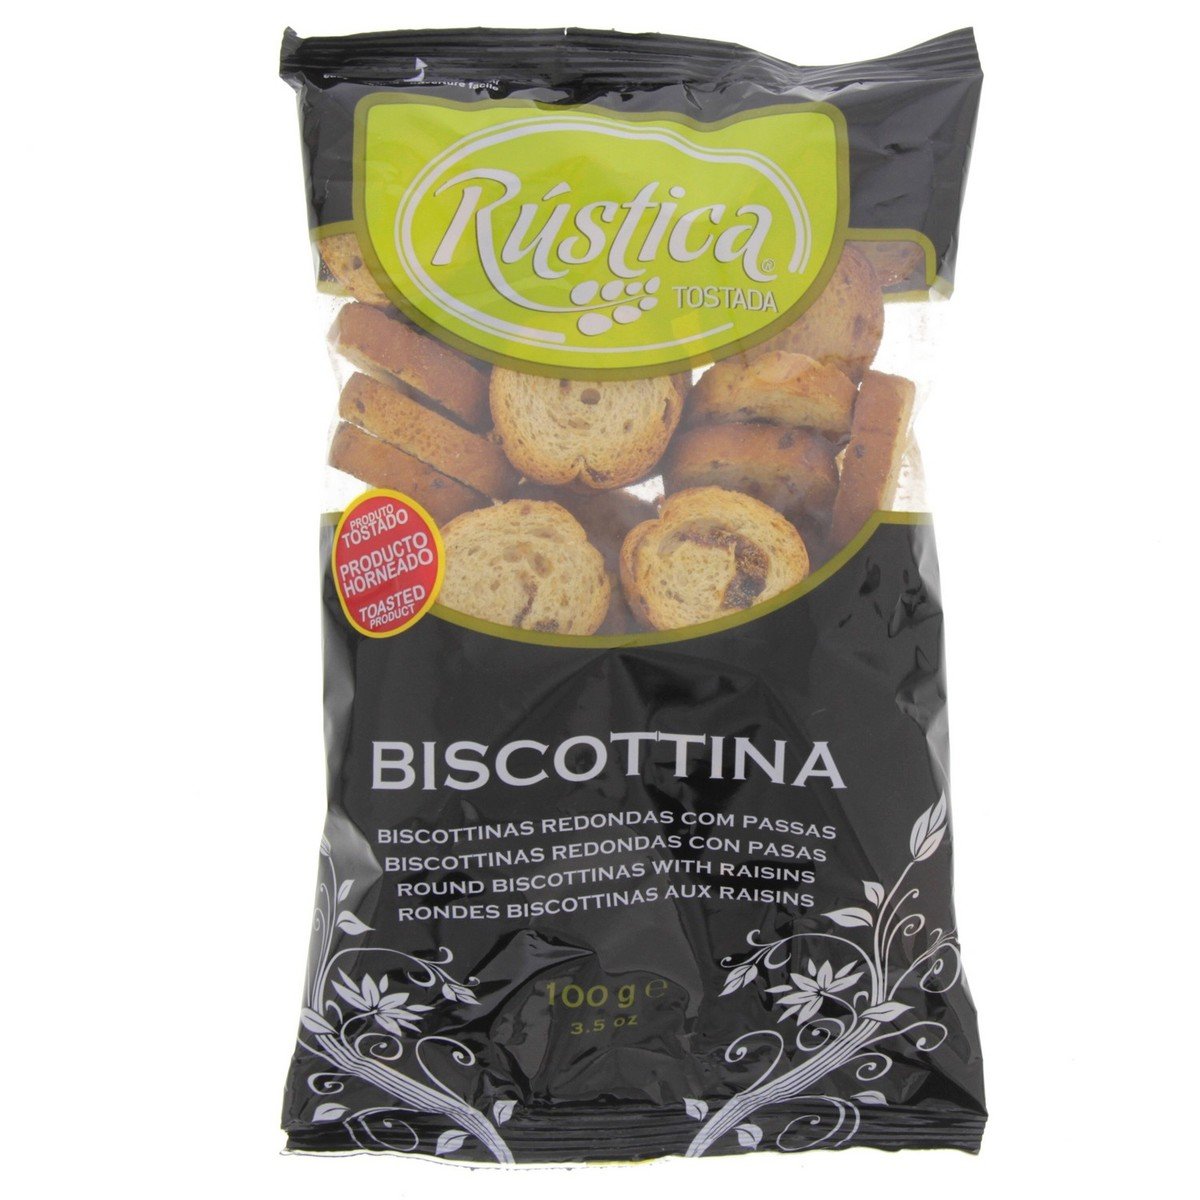 Rustica Biscottina with Raisins 100 g